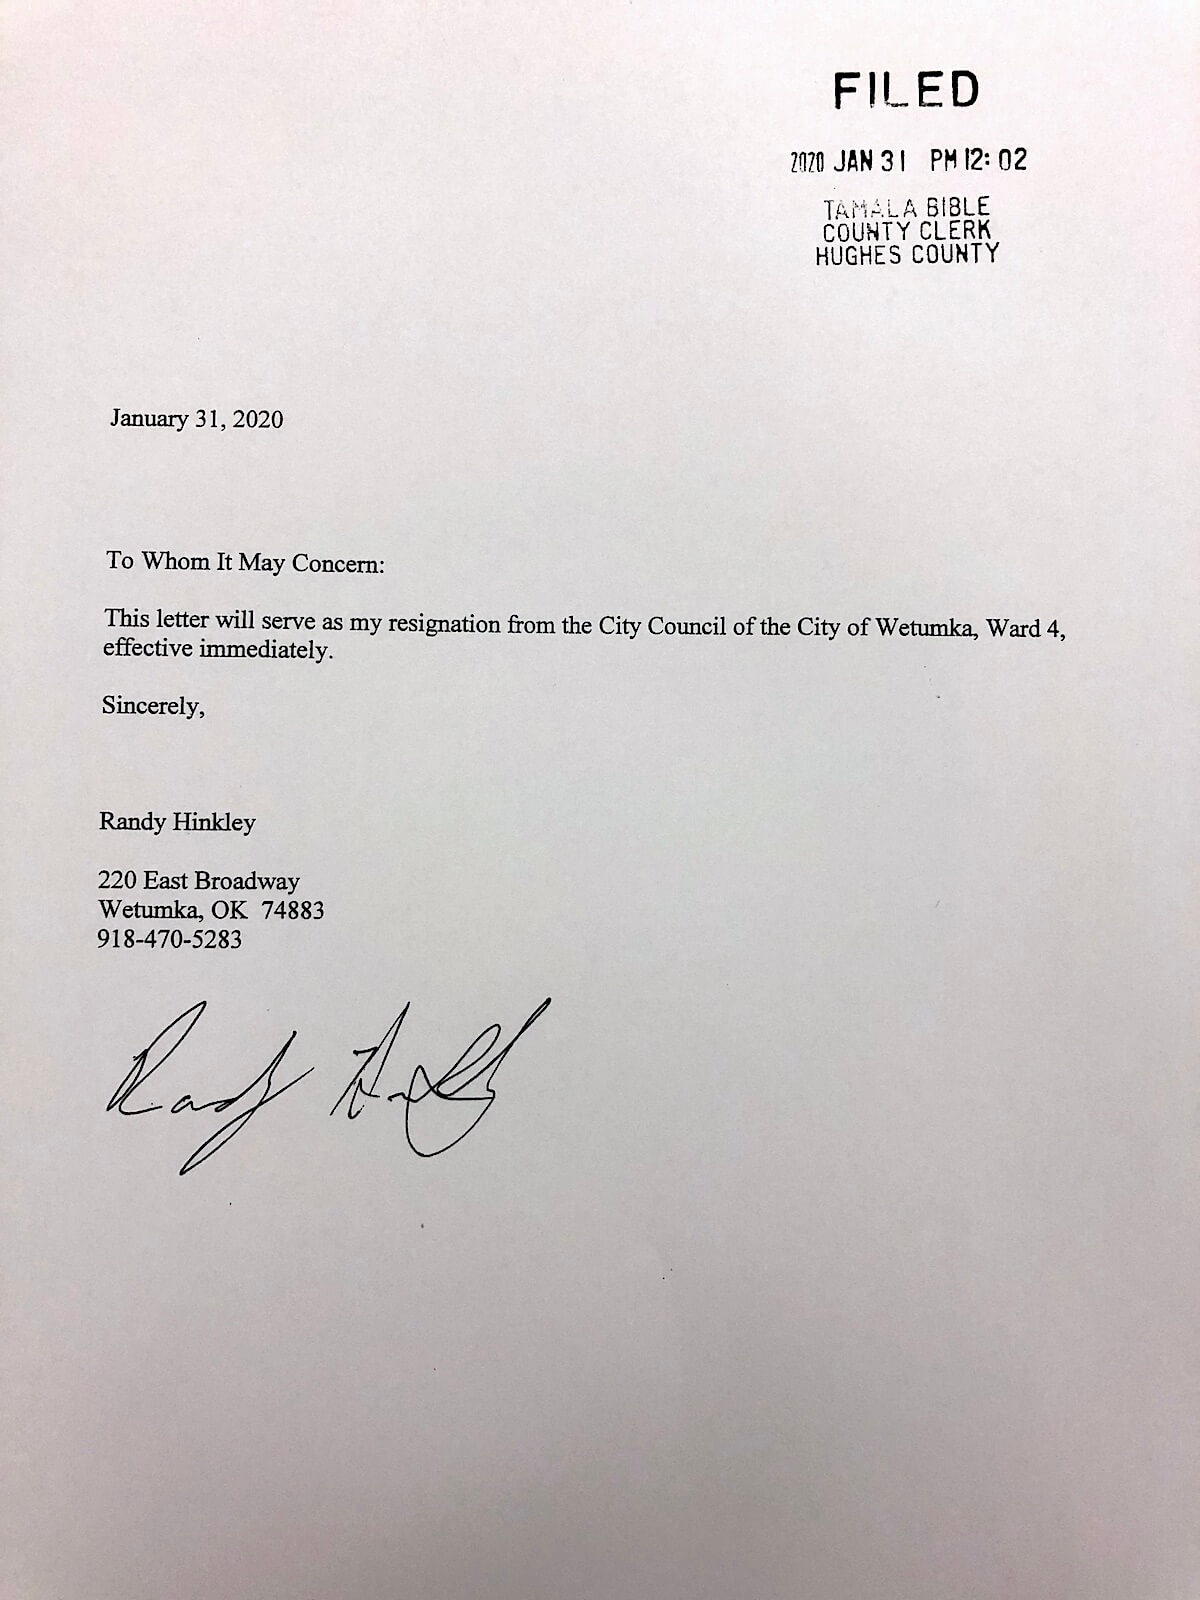 Randy Hinkley resignation